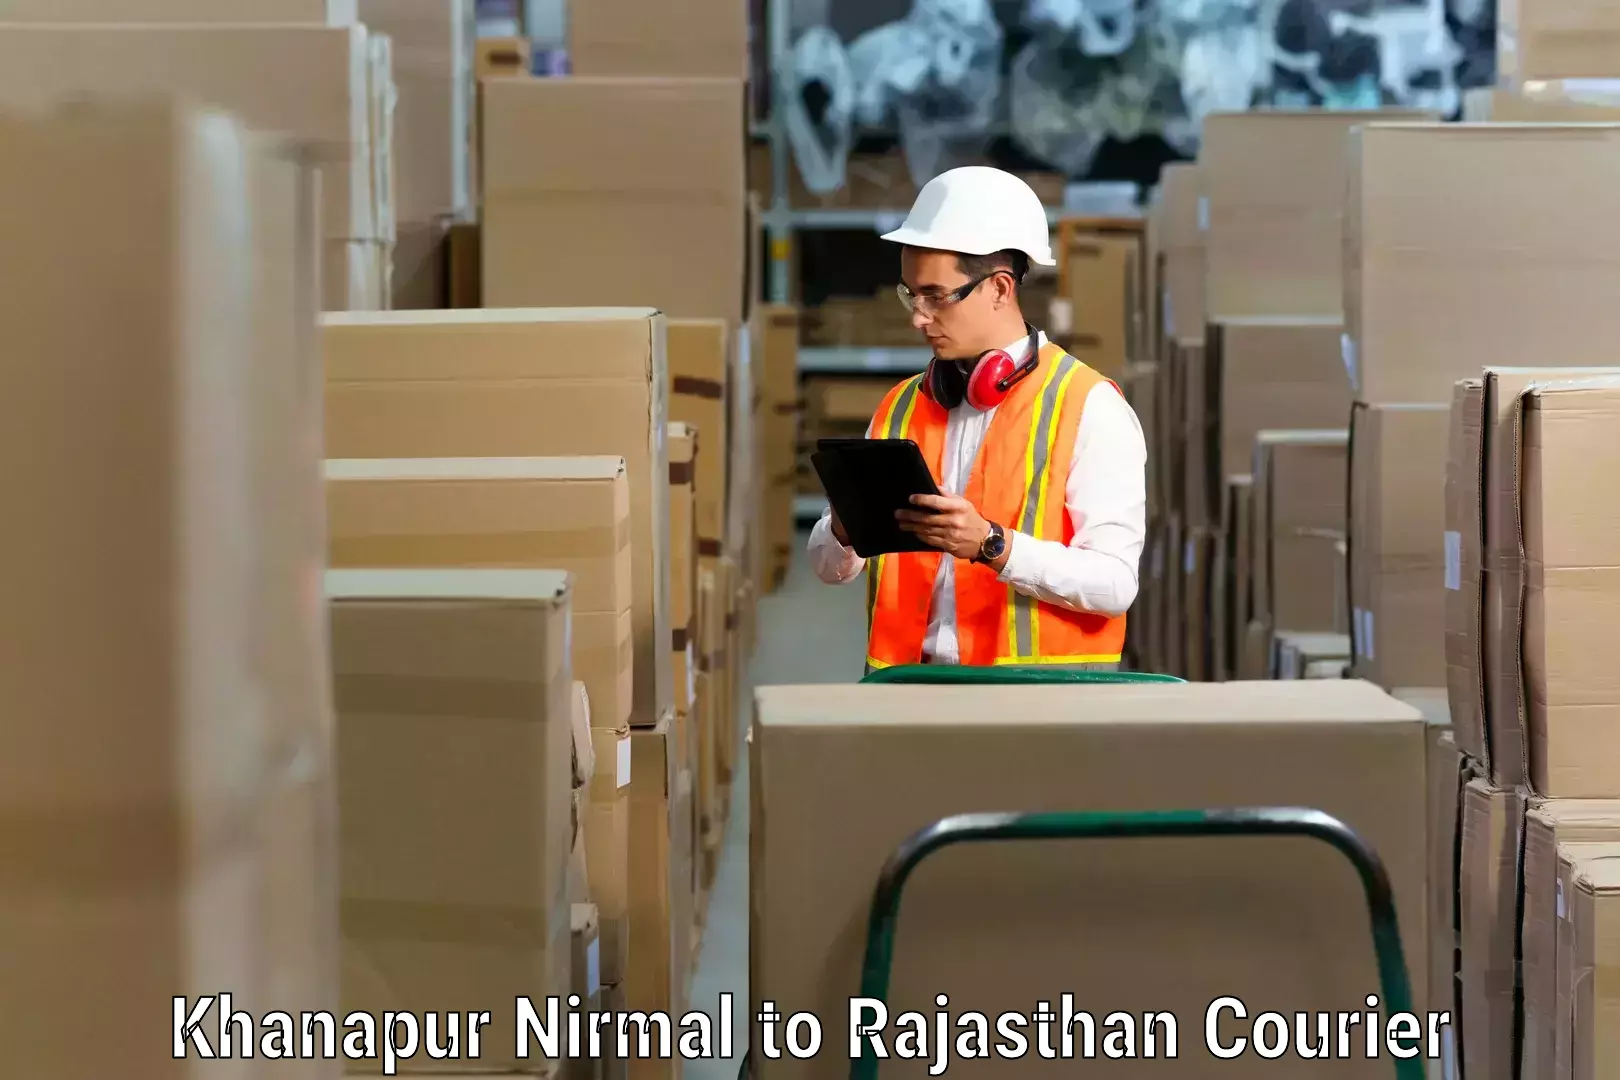 Furniture moving specialists Khanapur Nirmal to Chaumahla